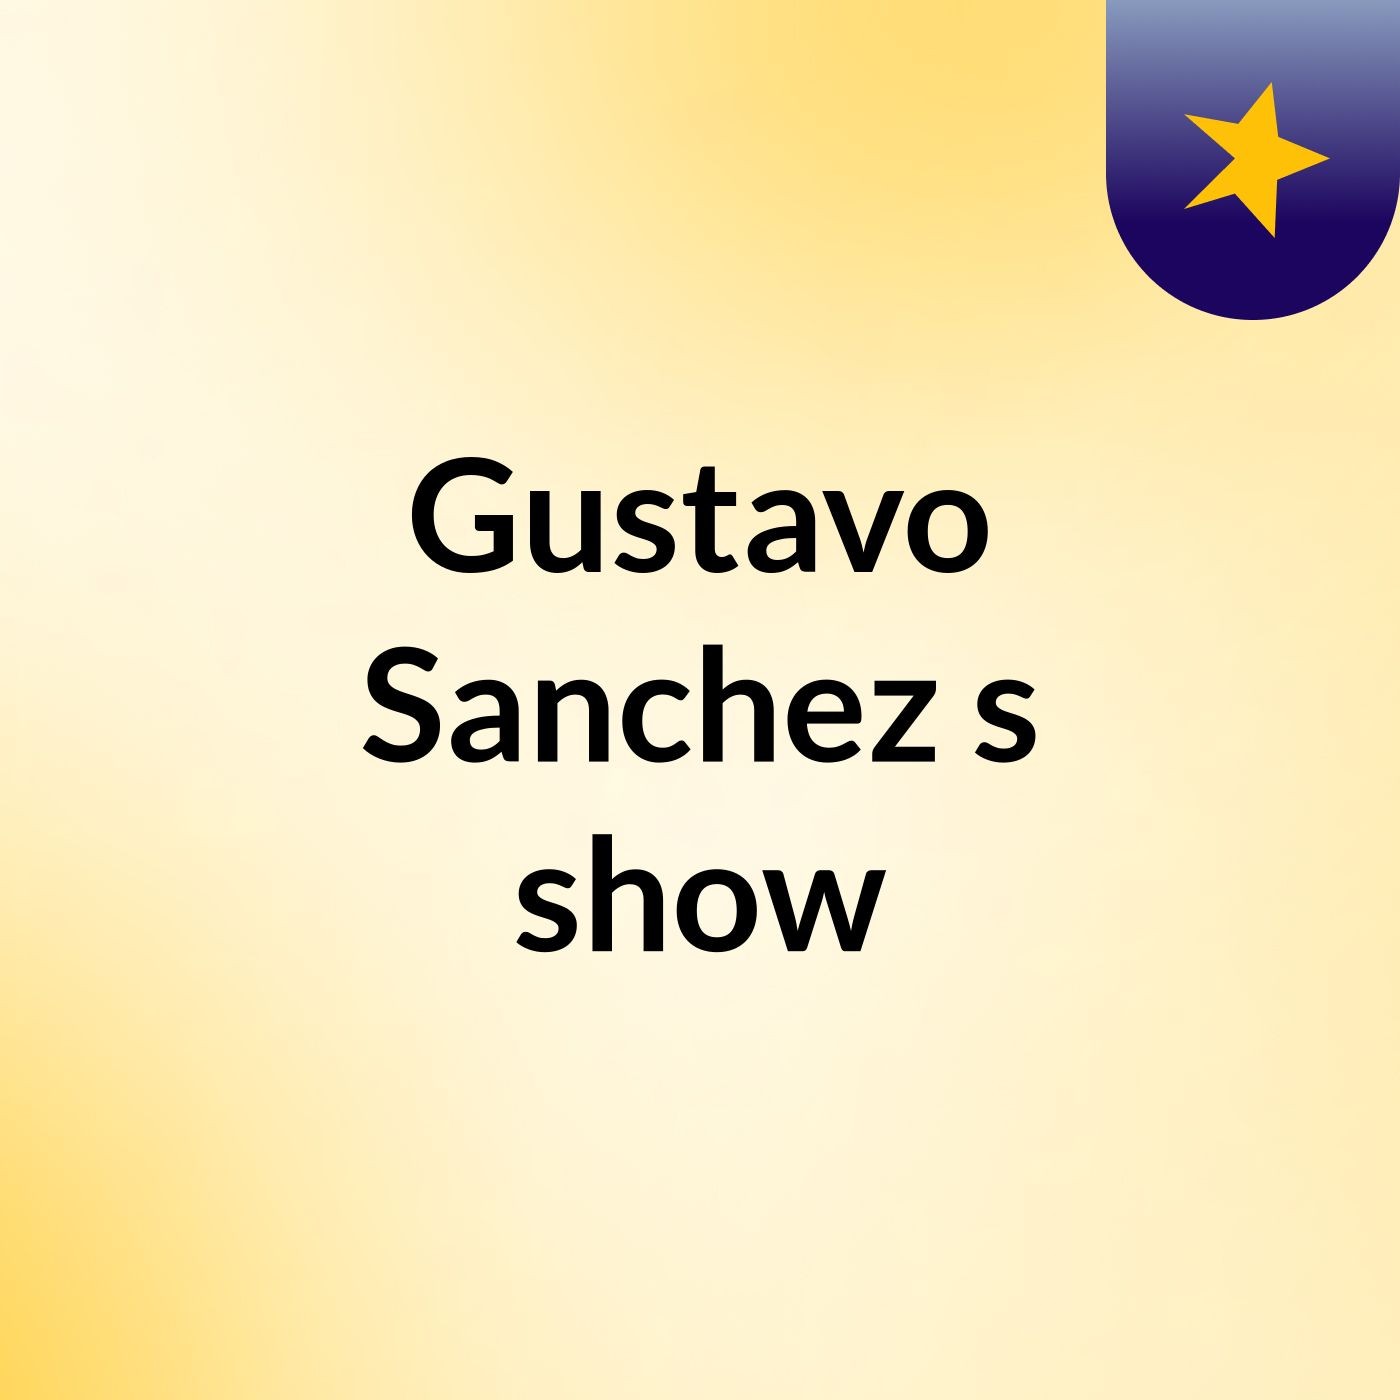 Gustavo Sanchez's show